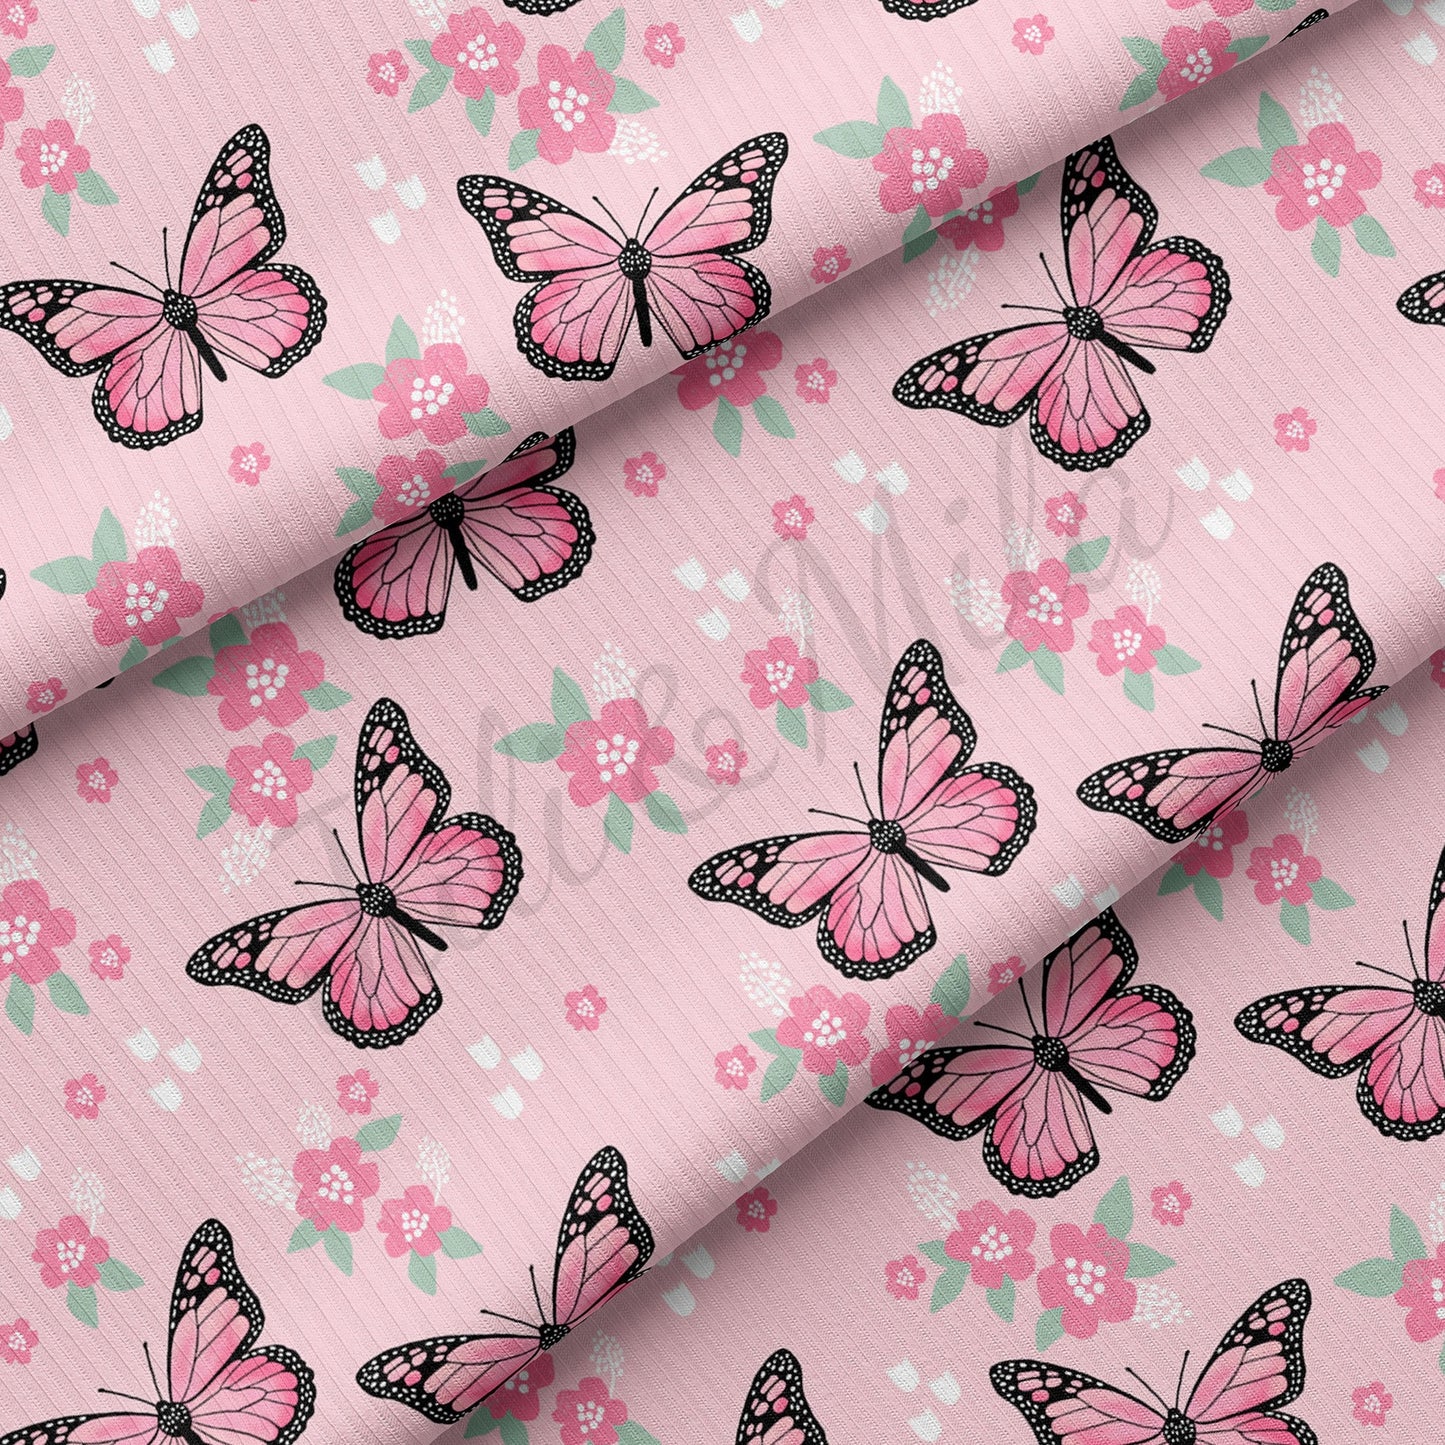 Butterfly Rib Knit Fabric RBK1489